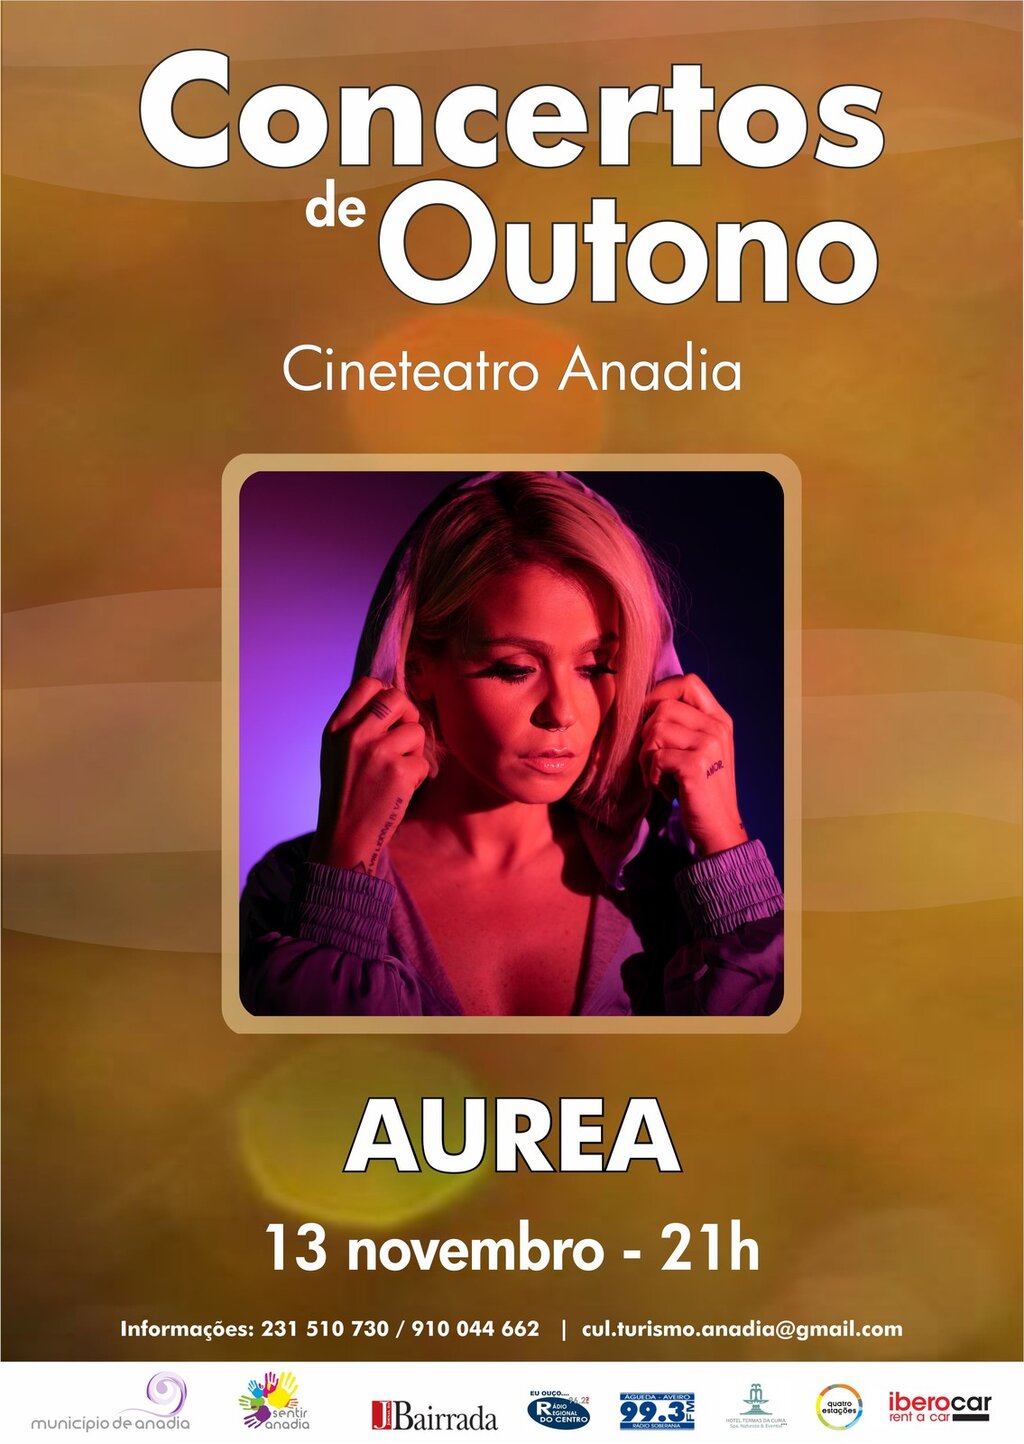 Aurea - "Concerto de Outono"  